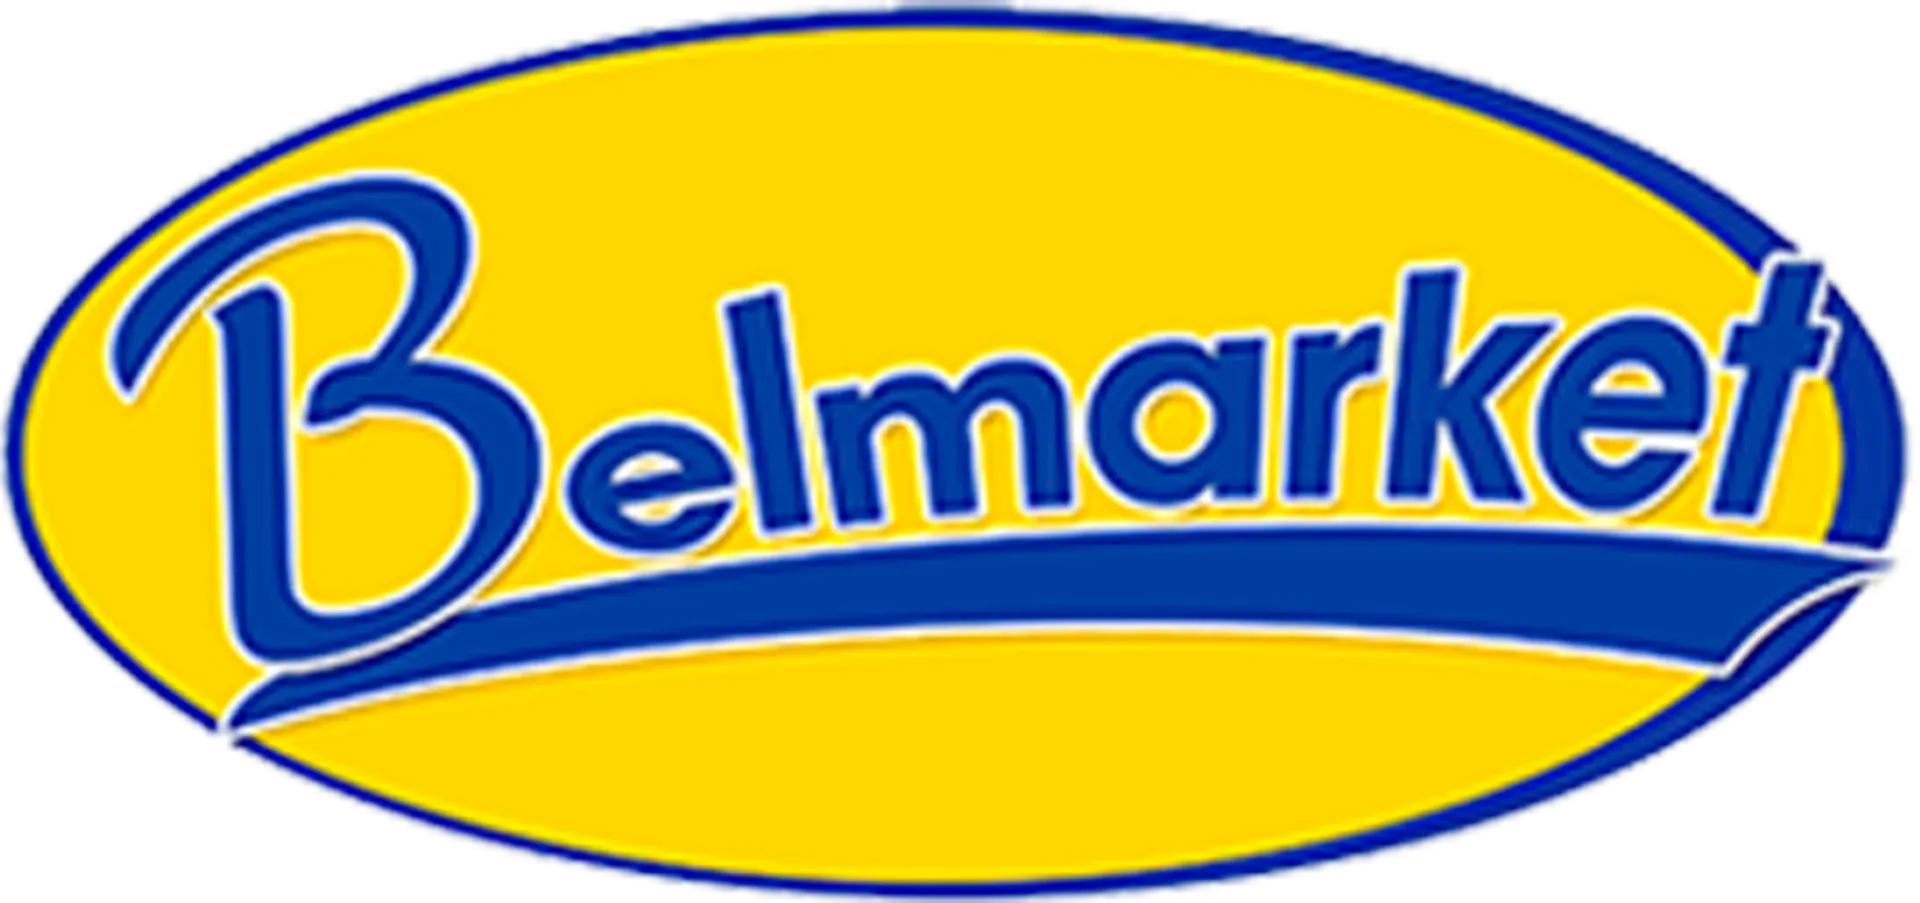 BELMARKET logo